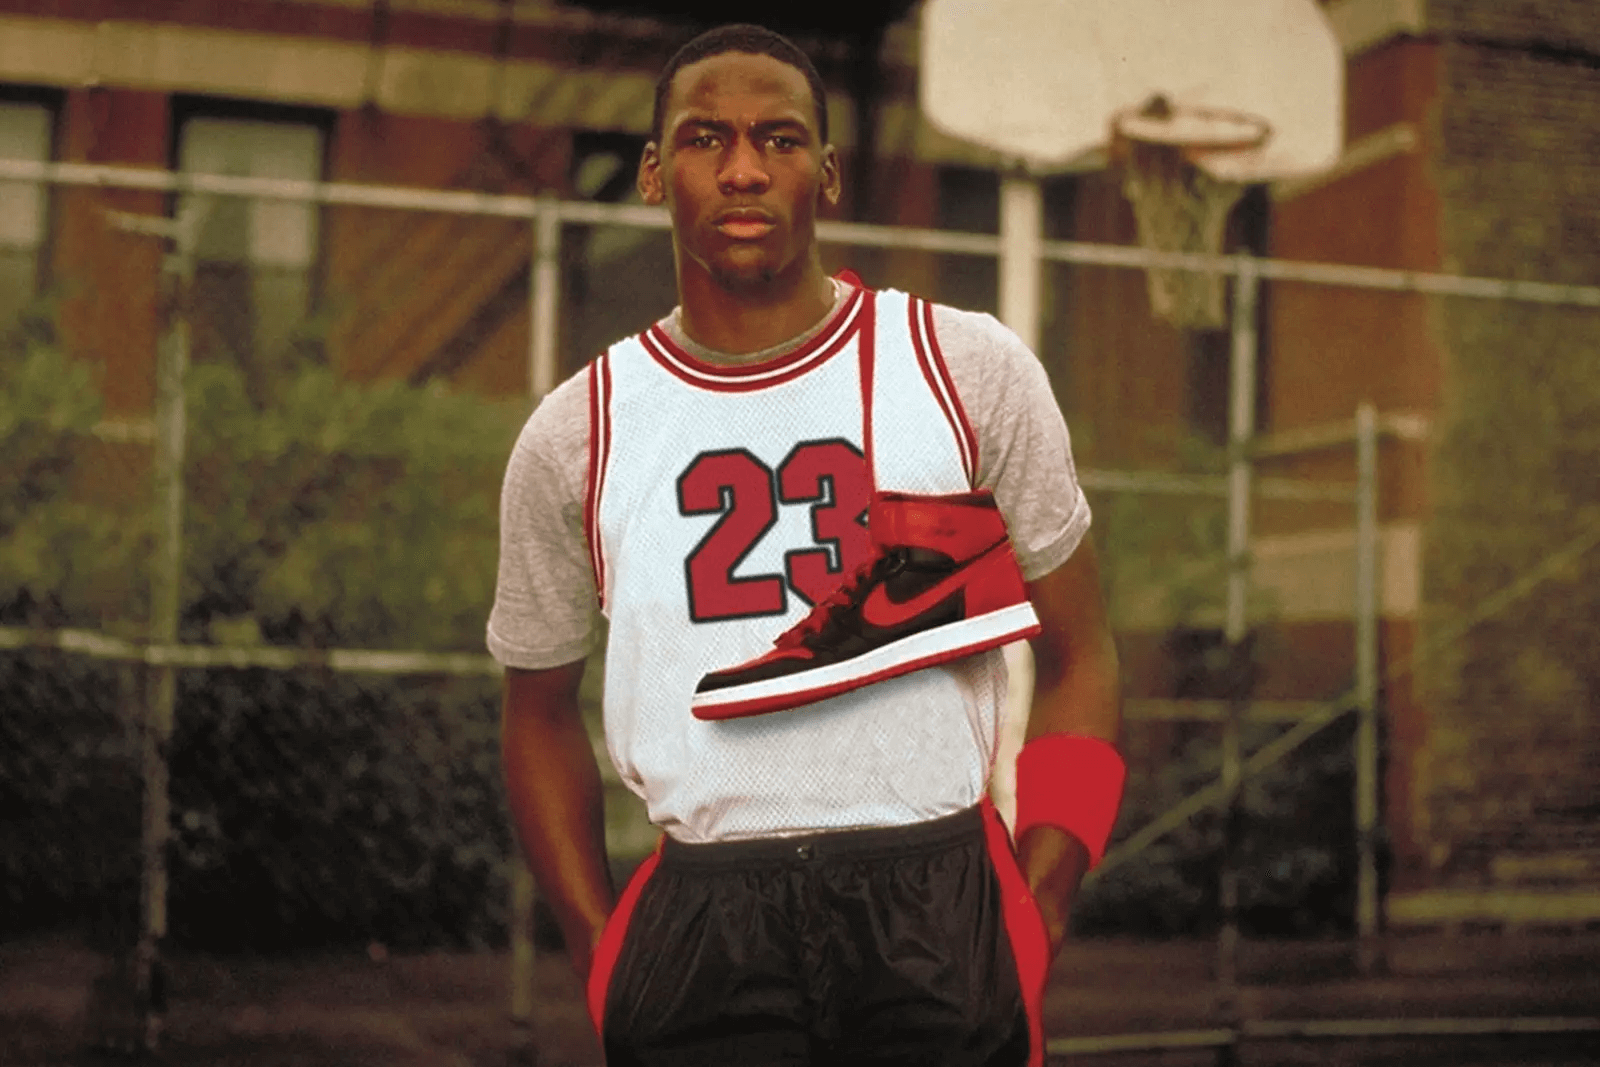 Jordan 1 was released as a combination of Nike and basketball legend Michael Jordan. 